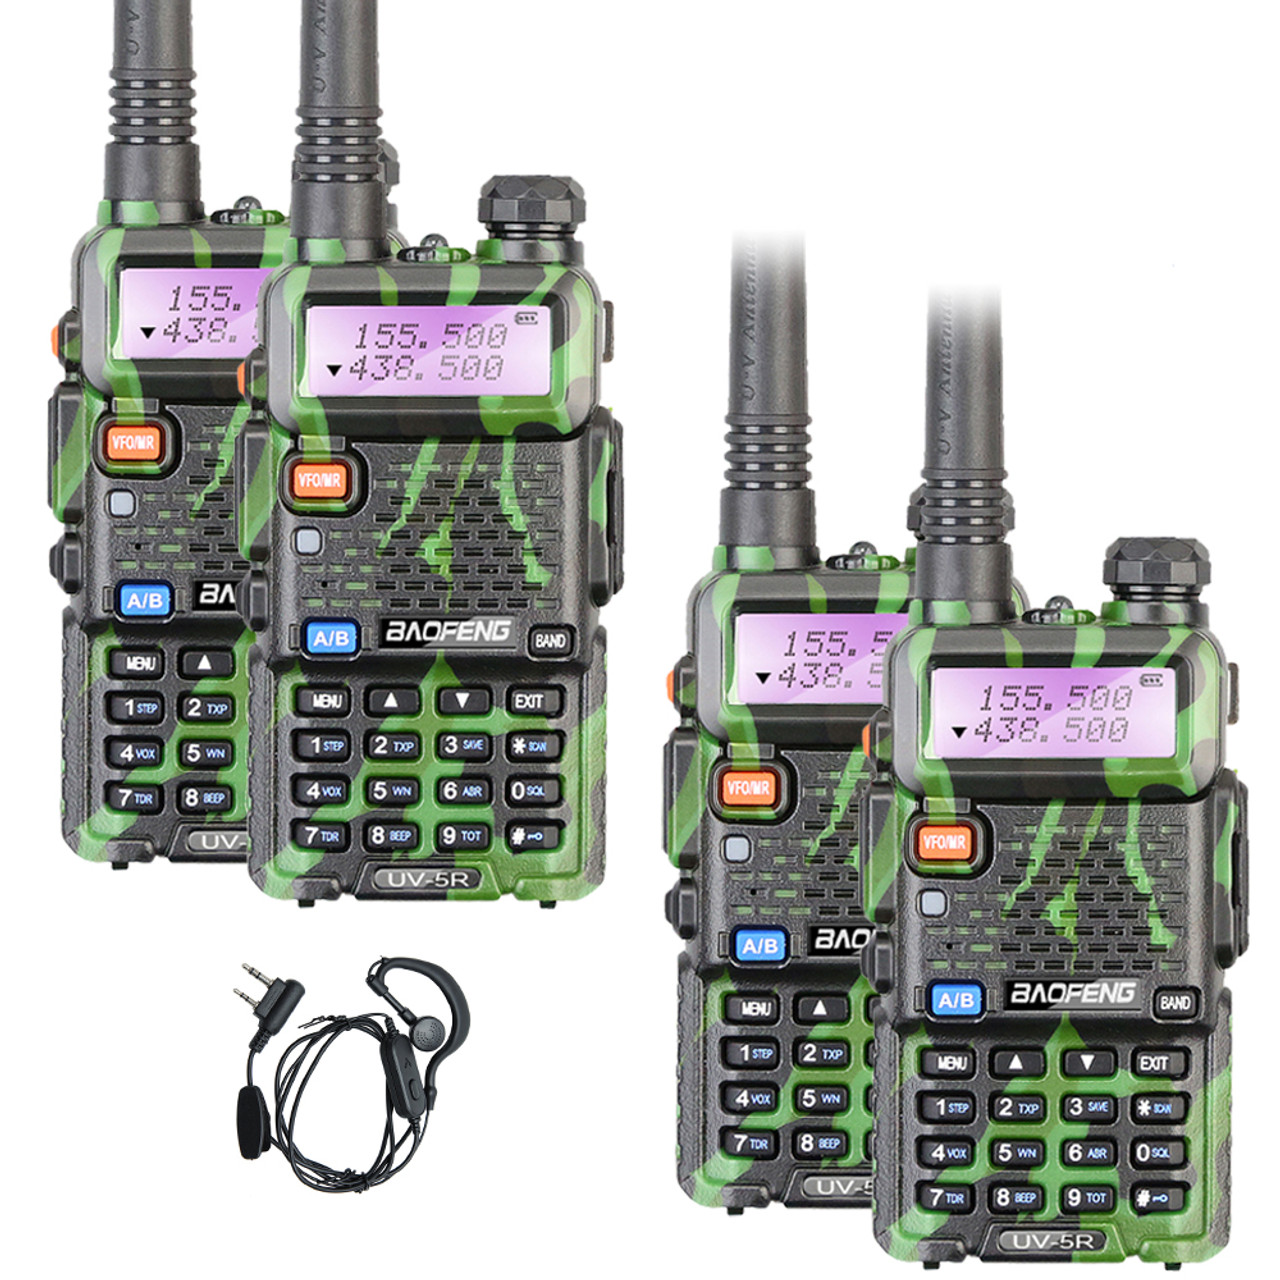 BaoFeng (UV-5R Pro) Ham Radio Handheld Walkie Talkies UHF VHF Dual Band 2-Way Radio Full Kit with an Extra 3800mAh Battery, Earpiece and Programming C - 1